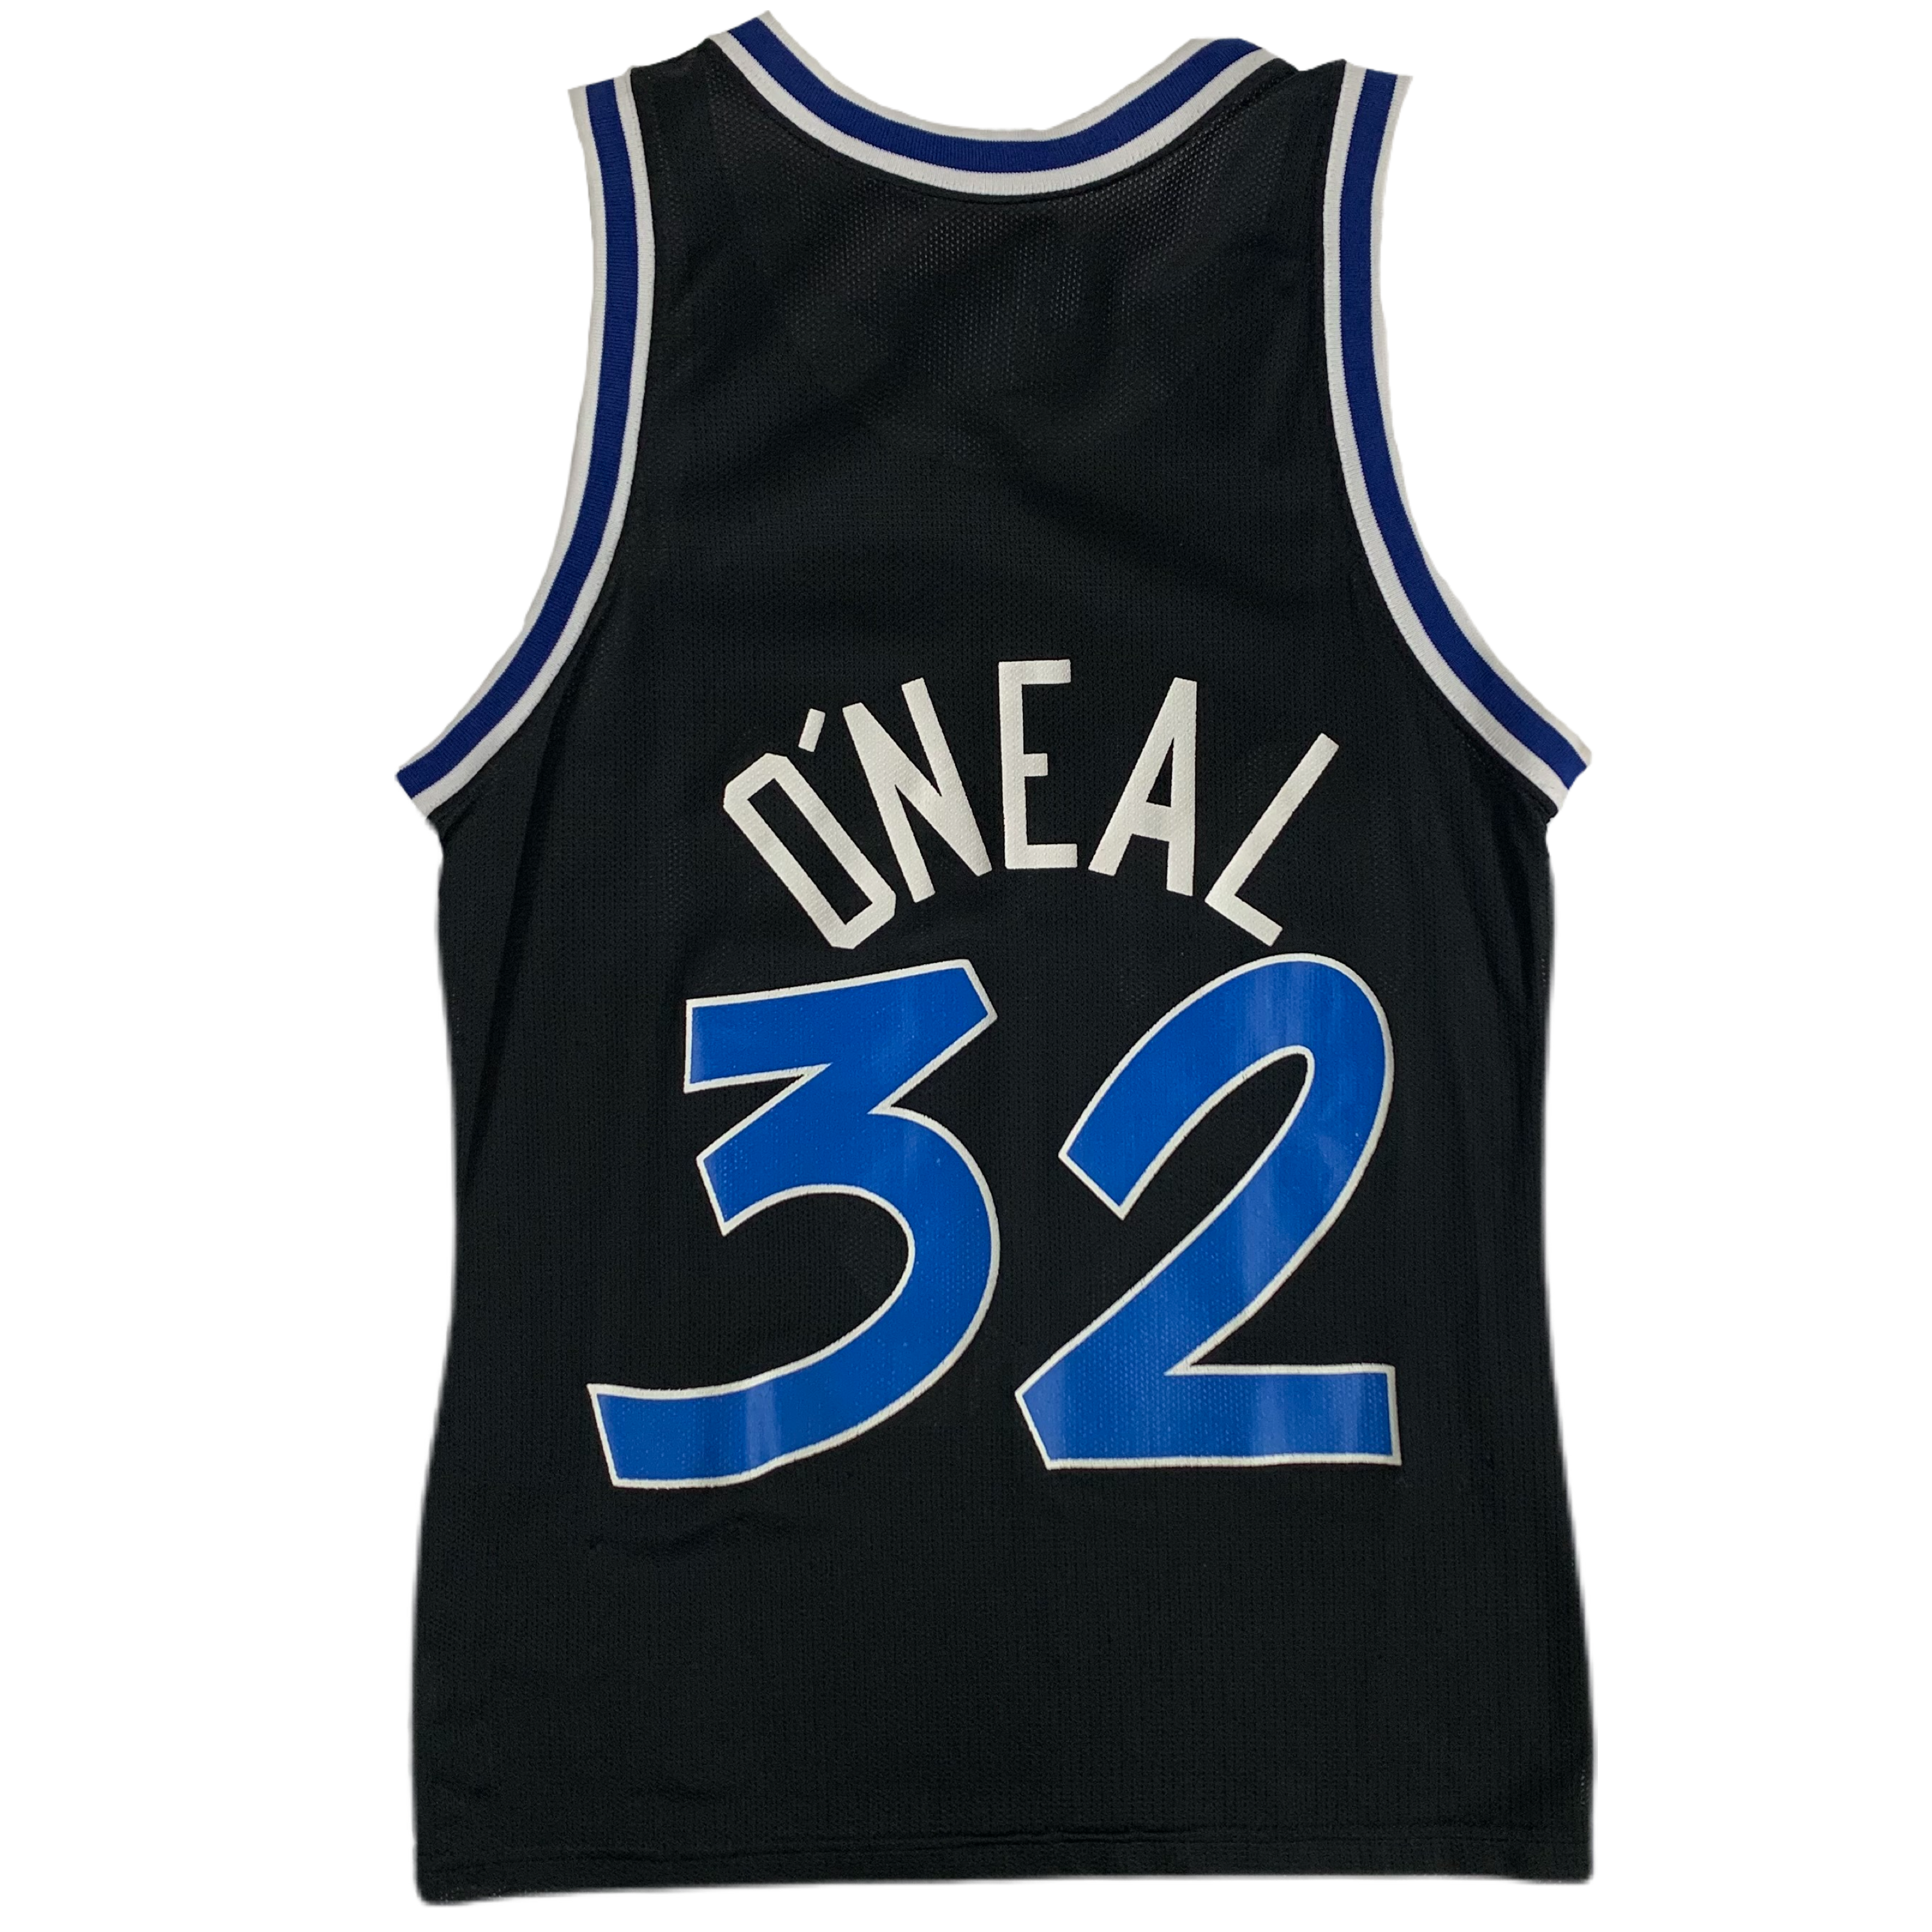 Shaq Orlando Magic champion jersey vintage Shaquille O’Neal NBA Basketball  shirt - small medium